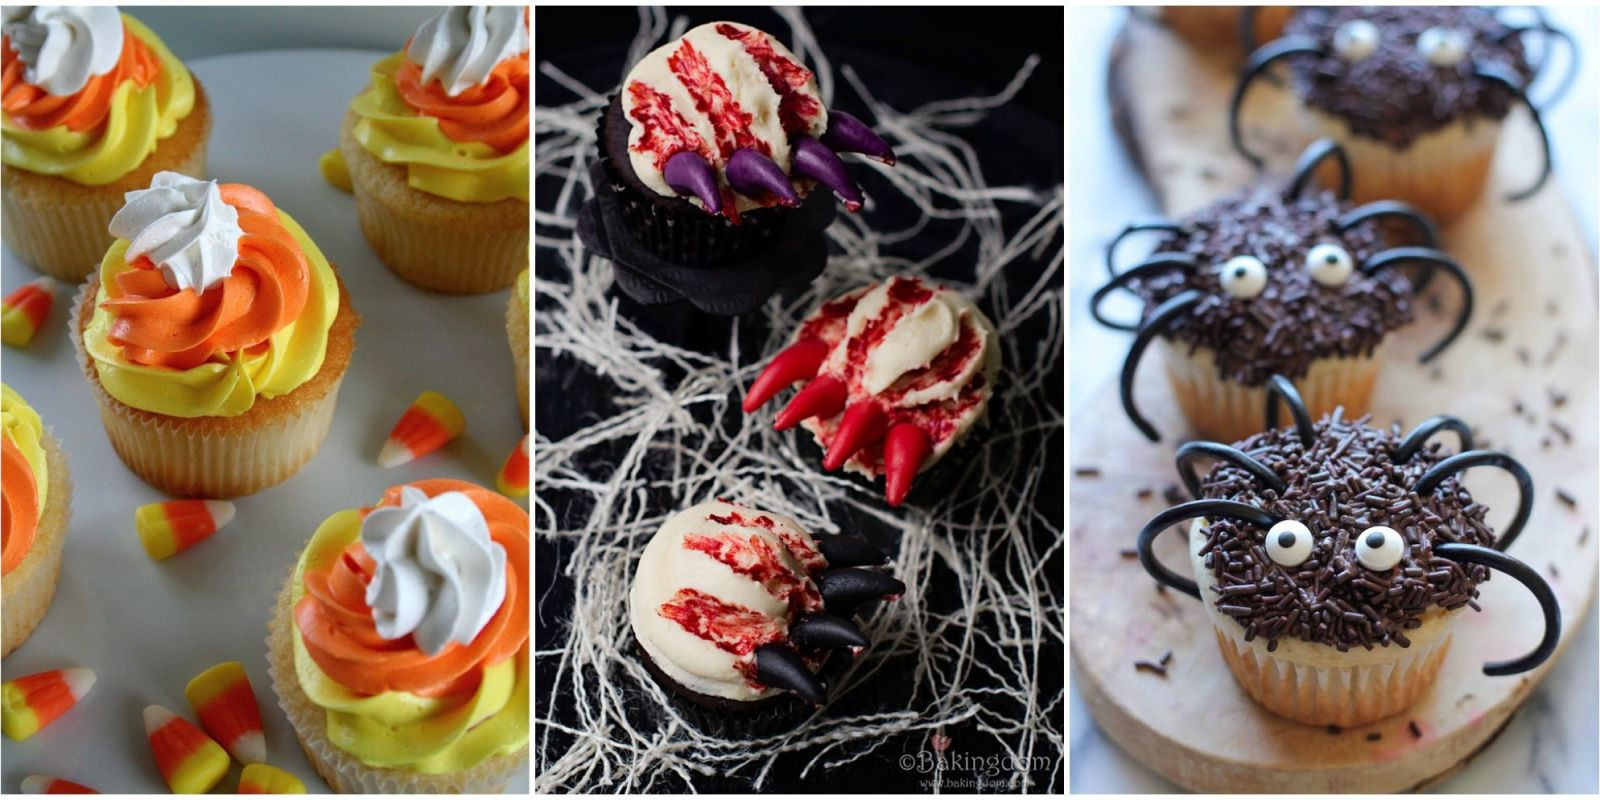 Easy Halloween Cupcakes For School
 33 Cute Halloween Cupcakes Easy Recipes for Halloween